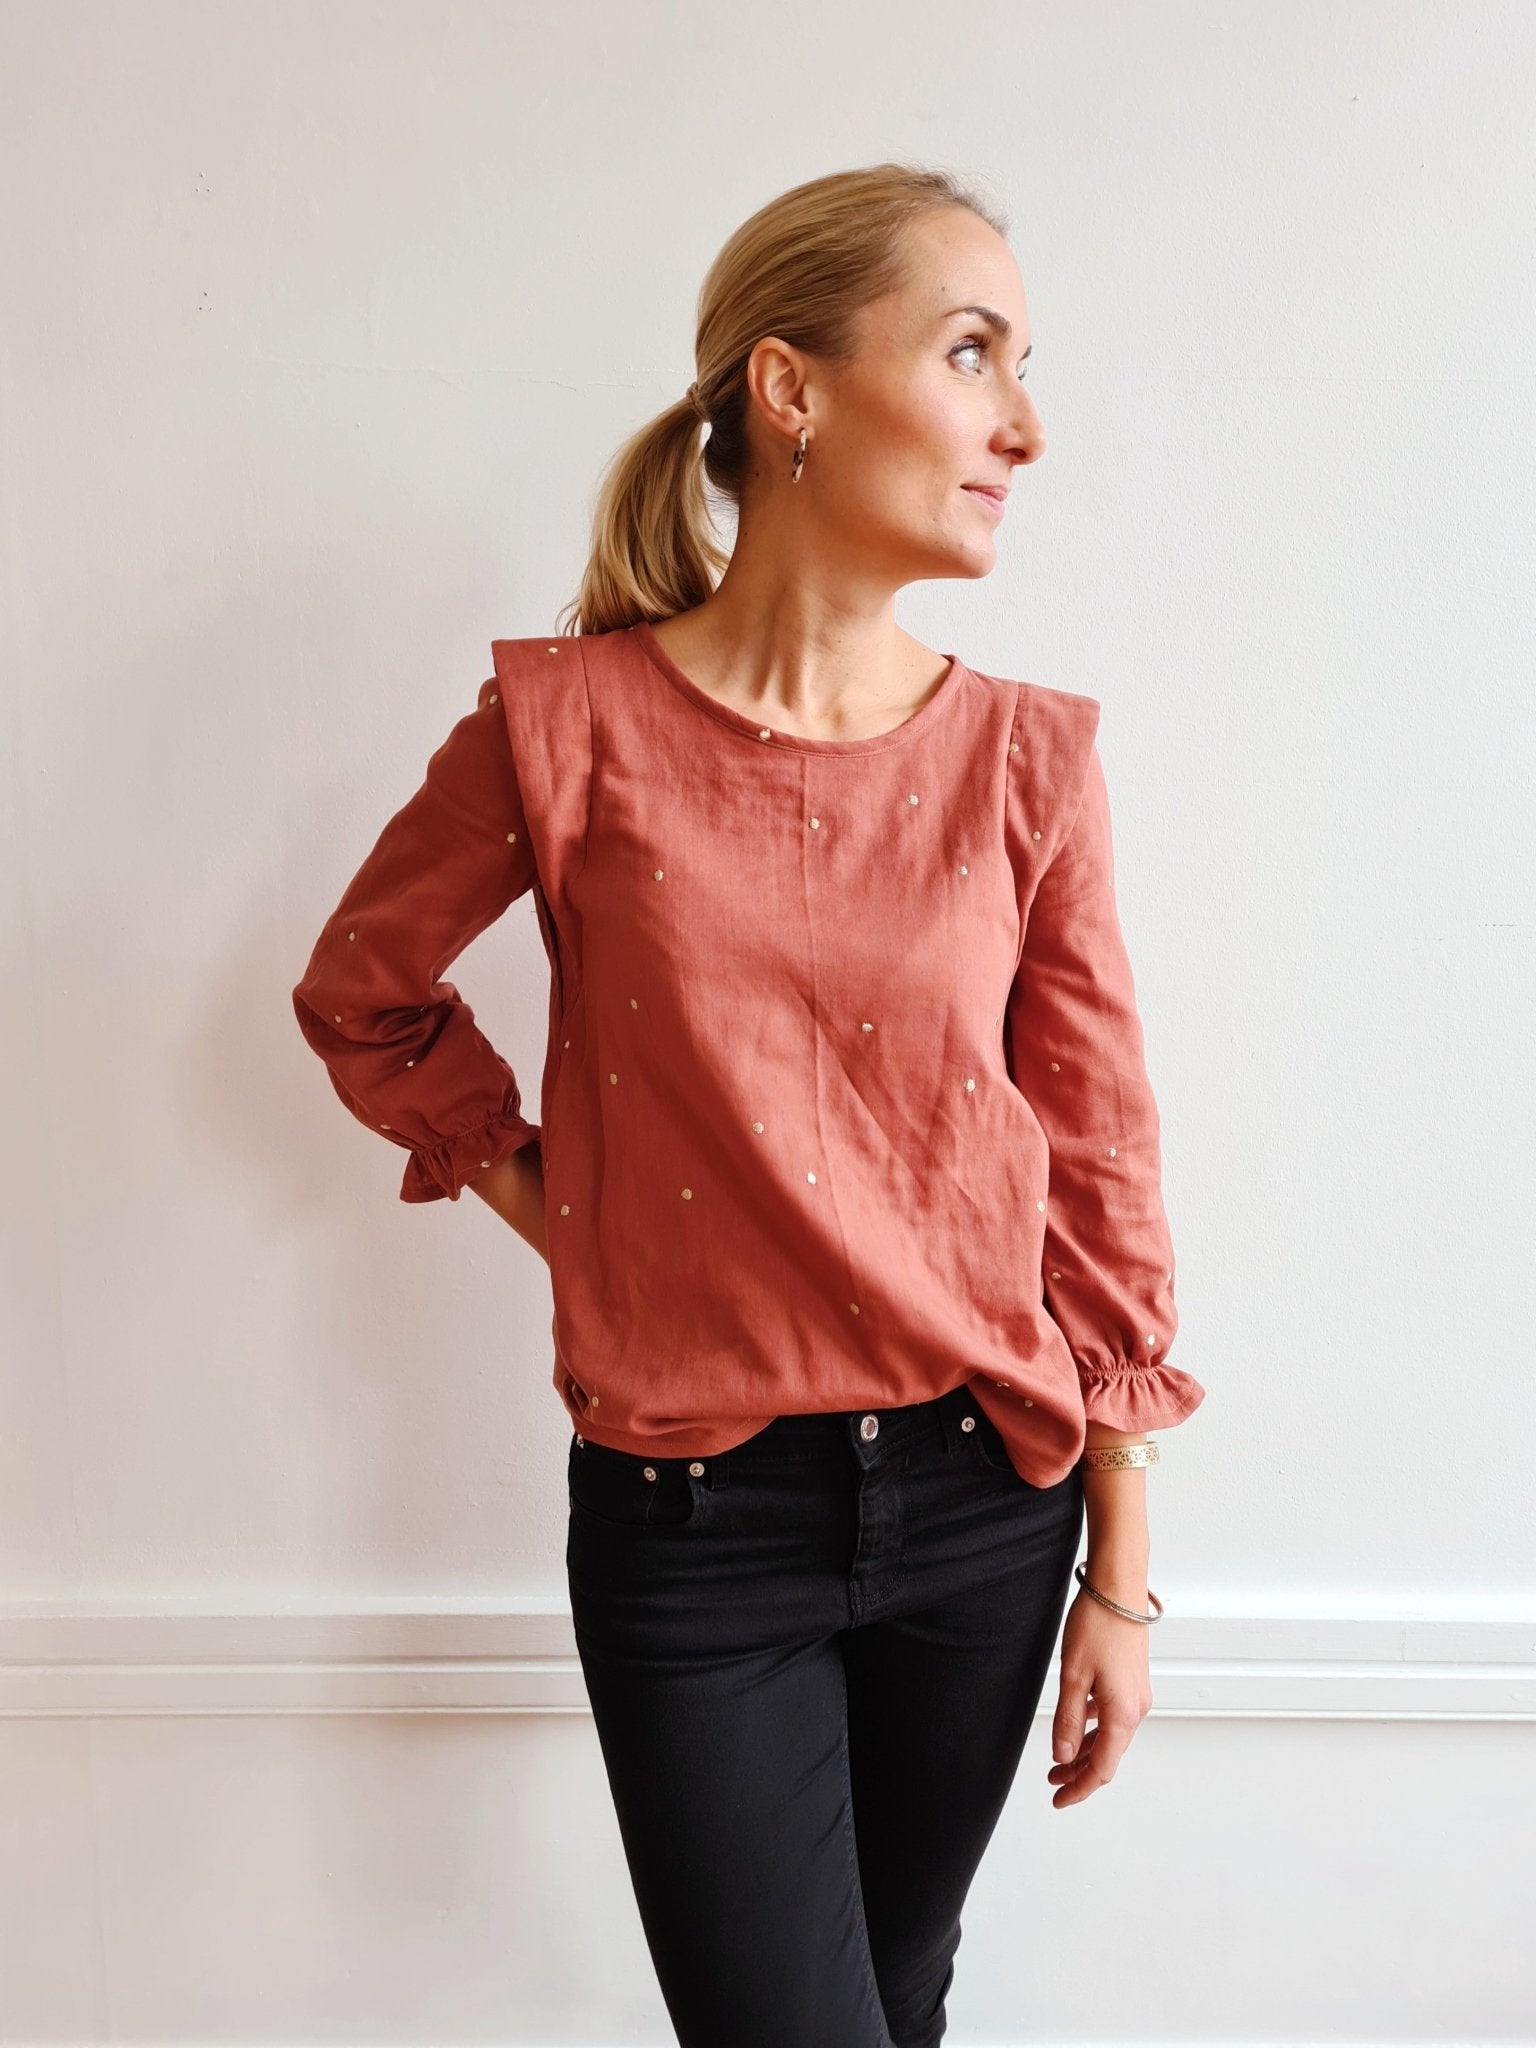 Olivia blouse - pattern paper  - Joli Lab